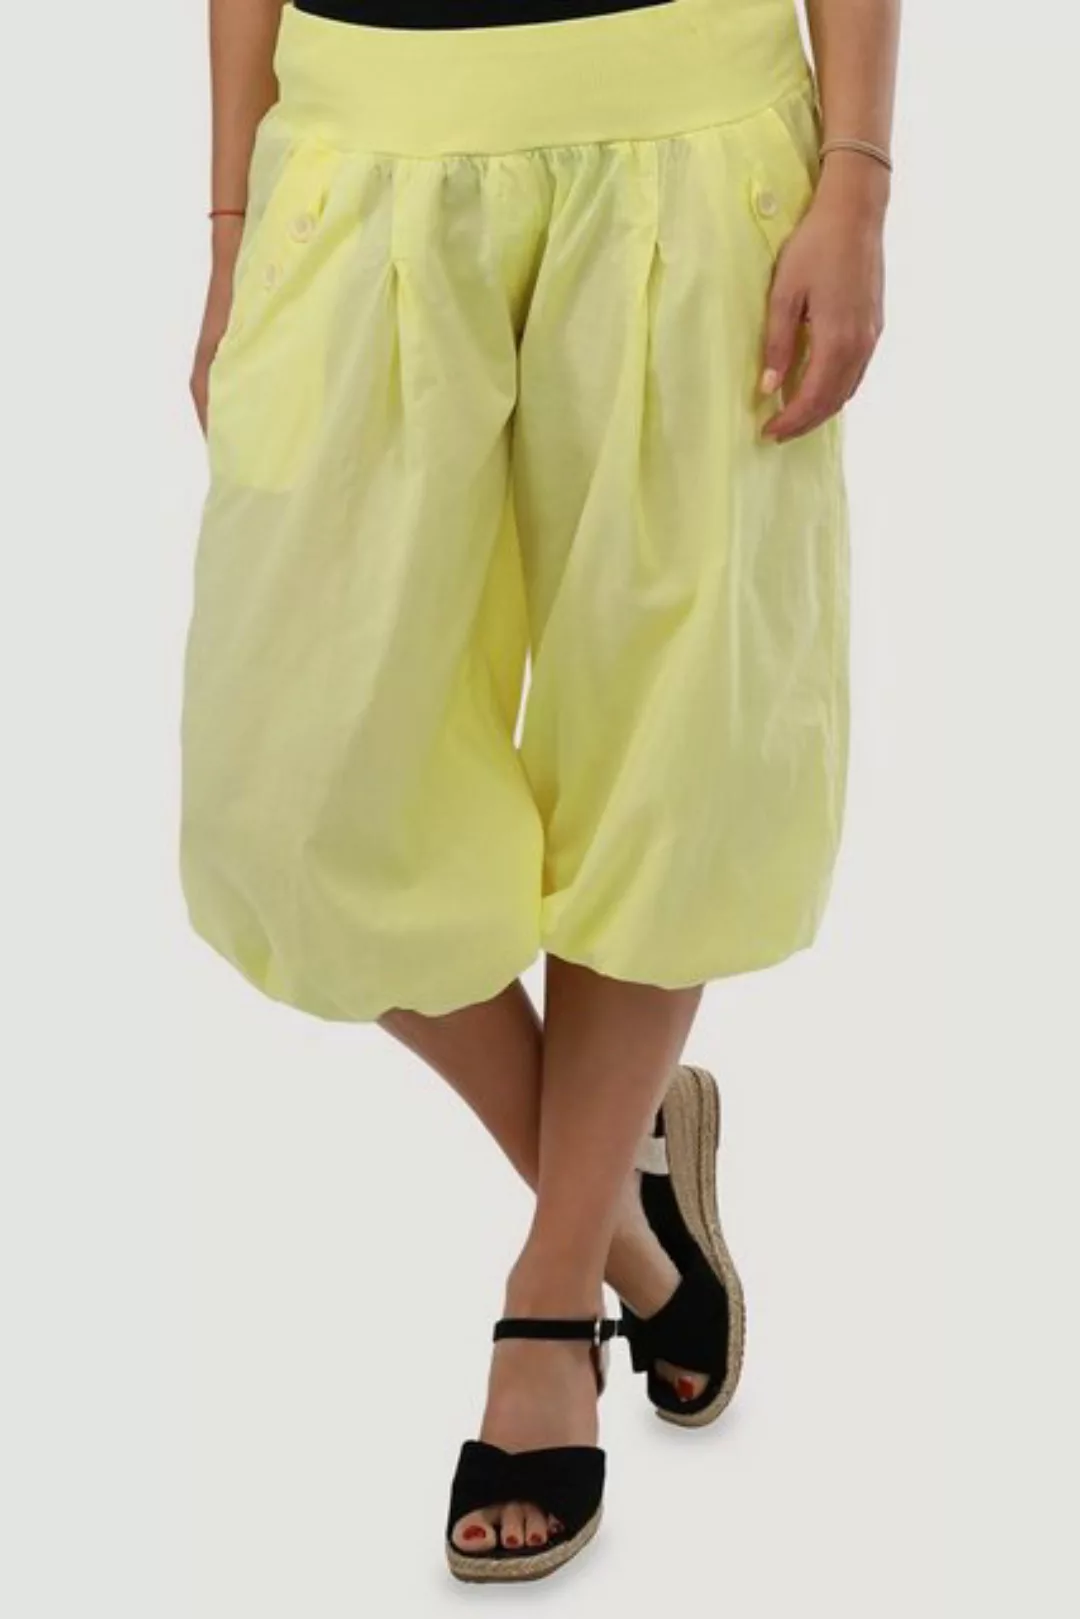 malito more than fashion Caprihose 23286P kurze low waist Aladinhose Caprih günstig online kaufen